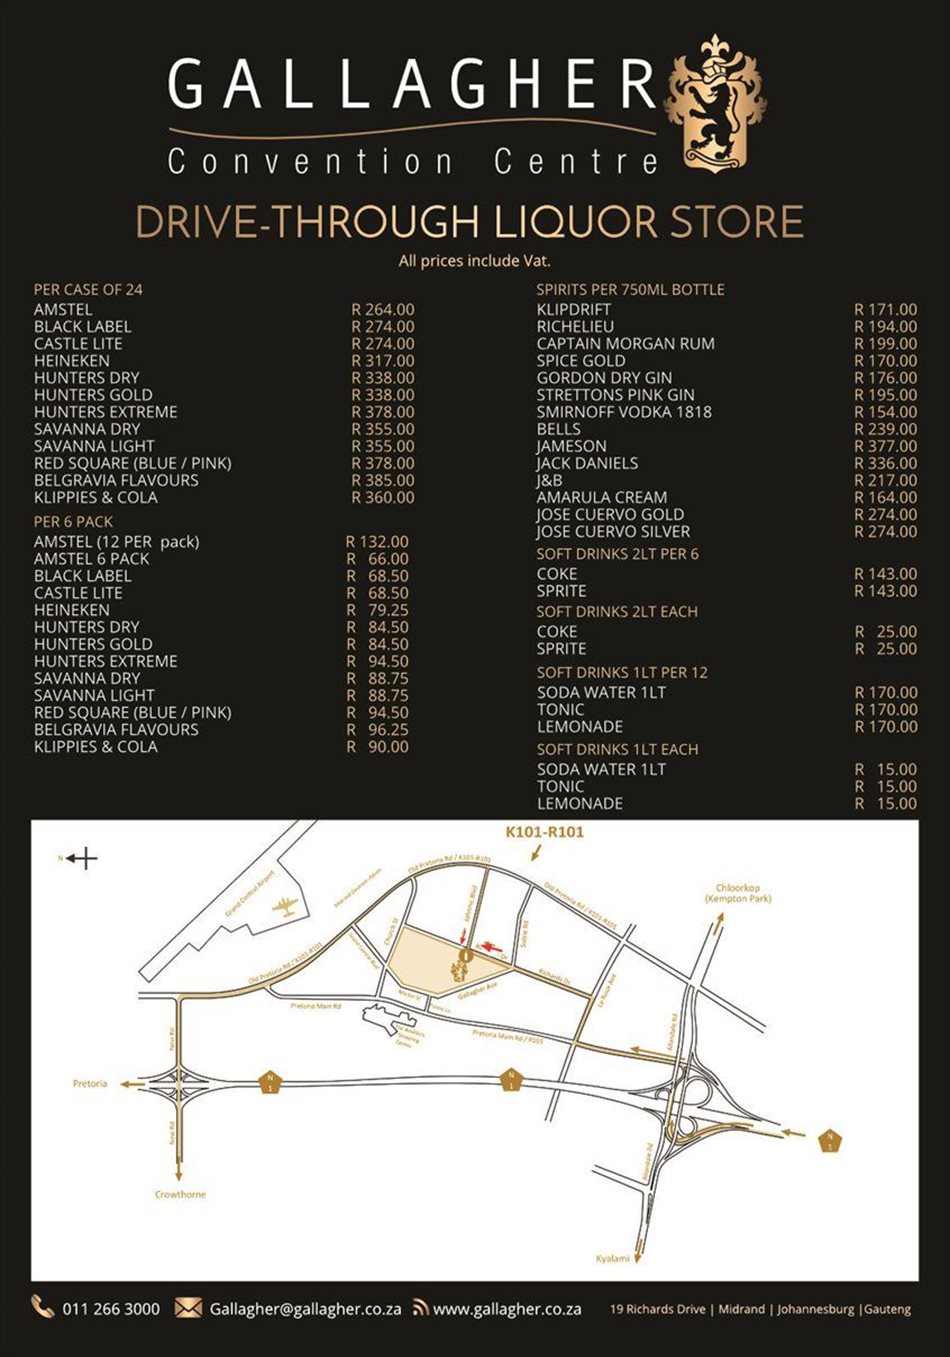 Gallagher Convention Centre drive-through liquor store